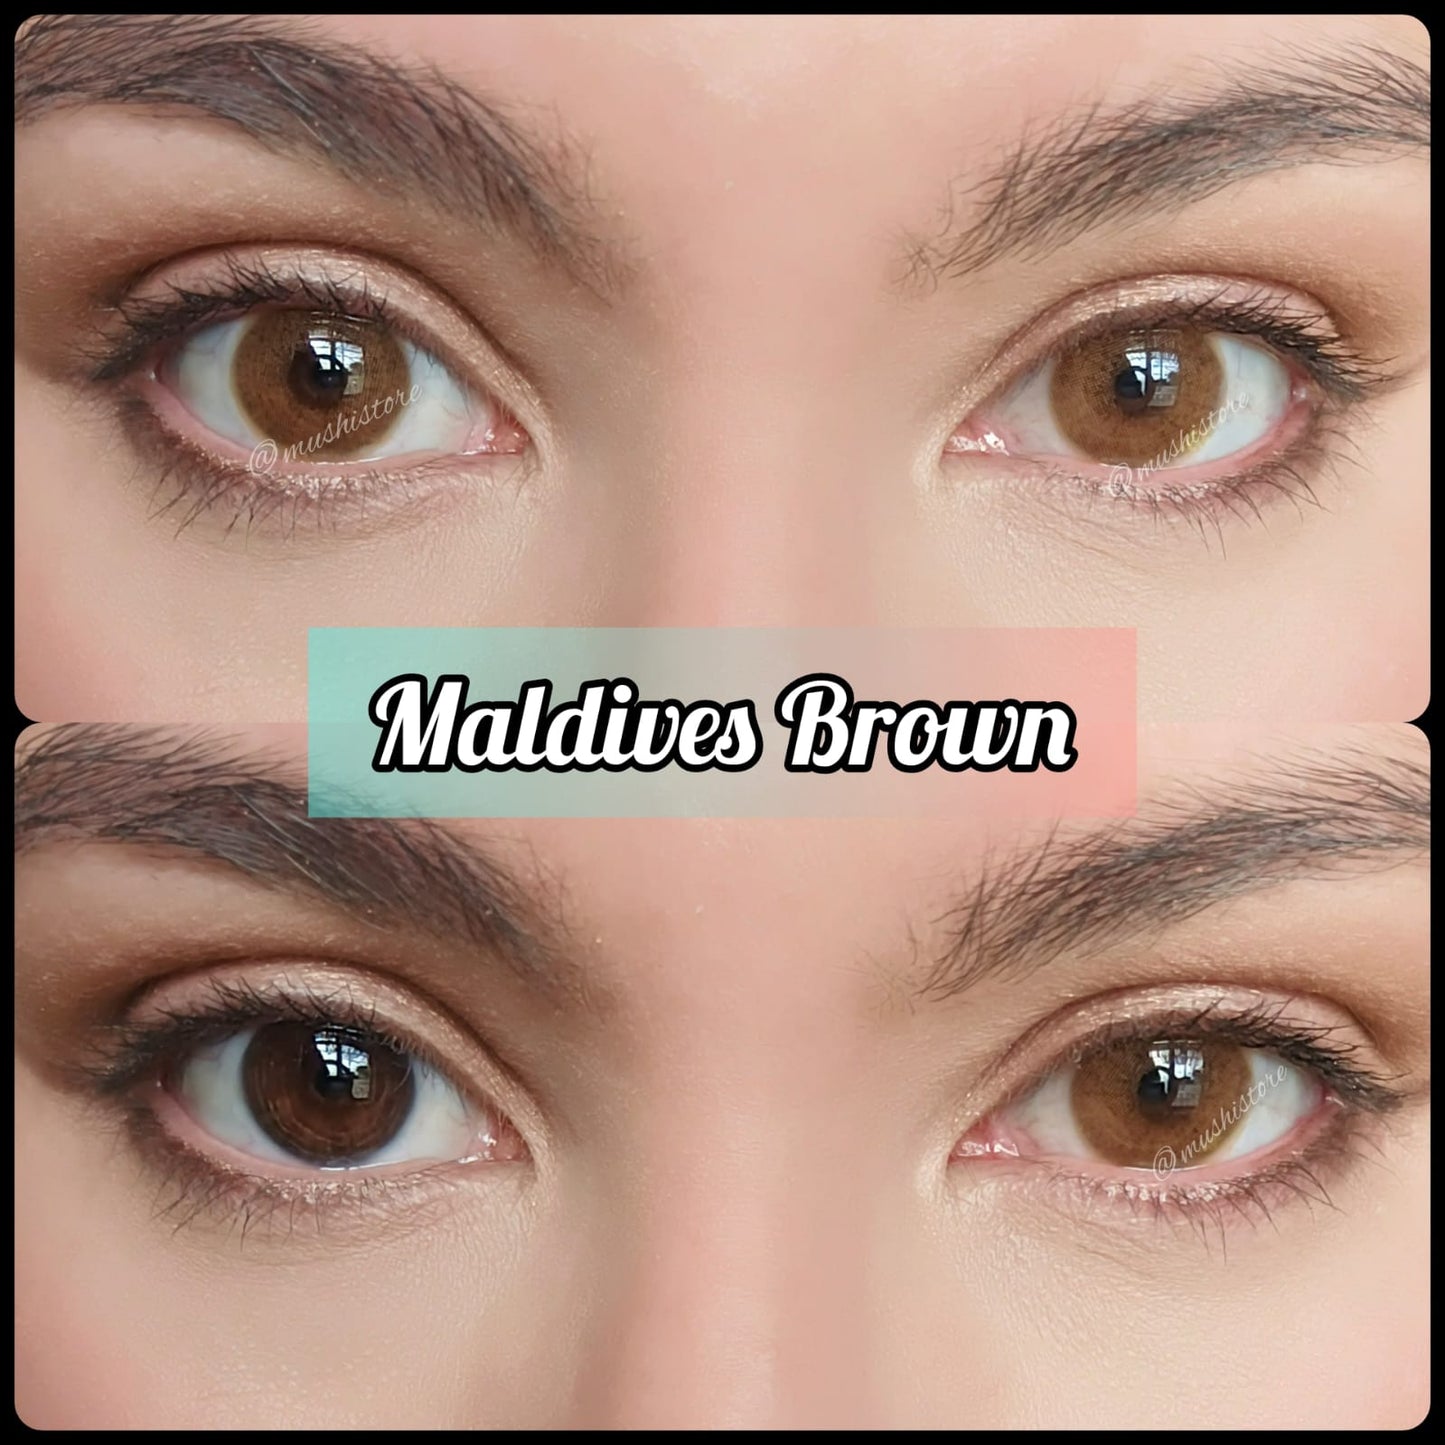 Maldives Brown